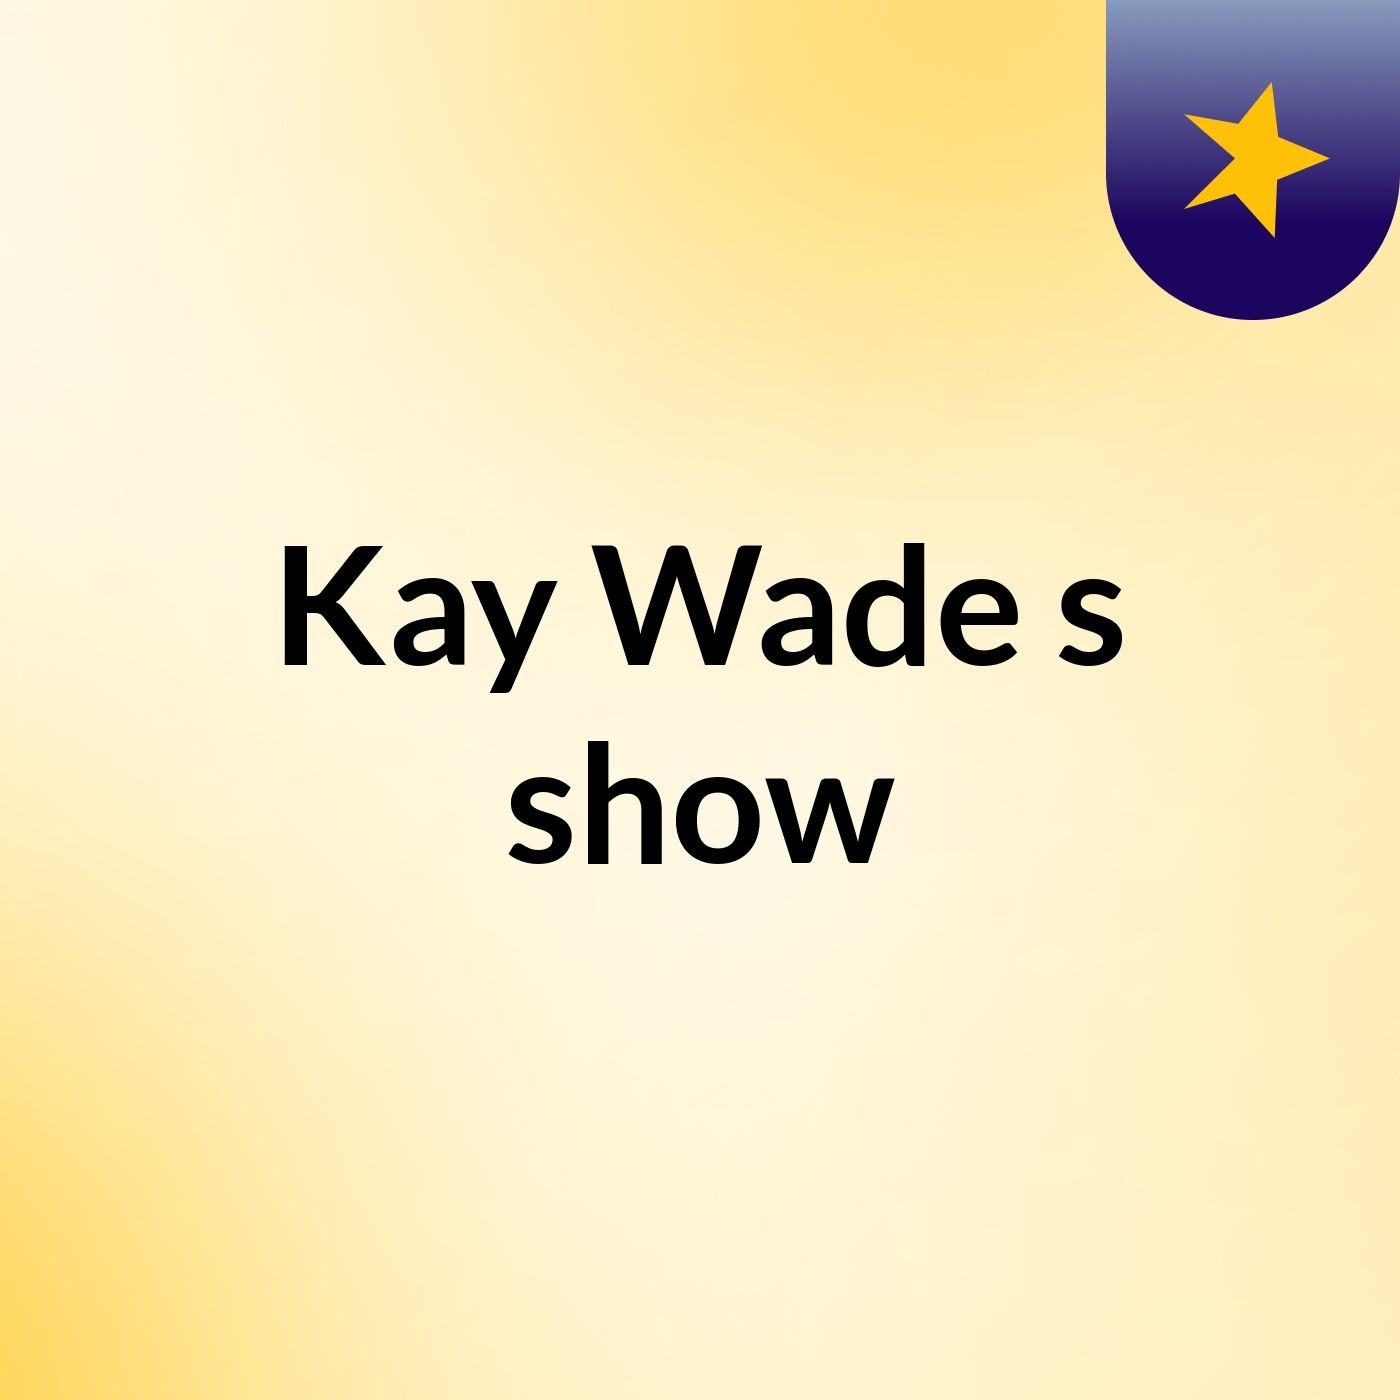 Kay Wade's show